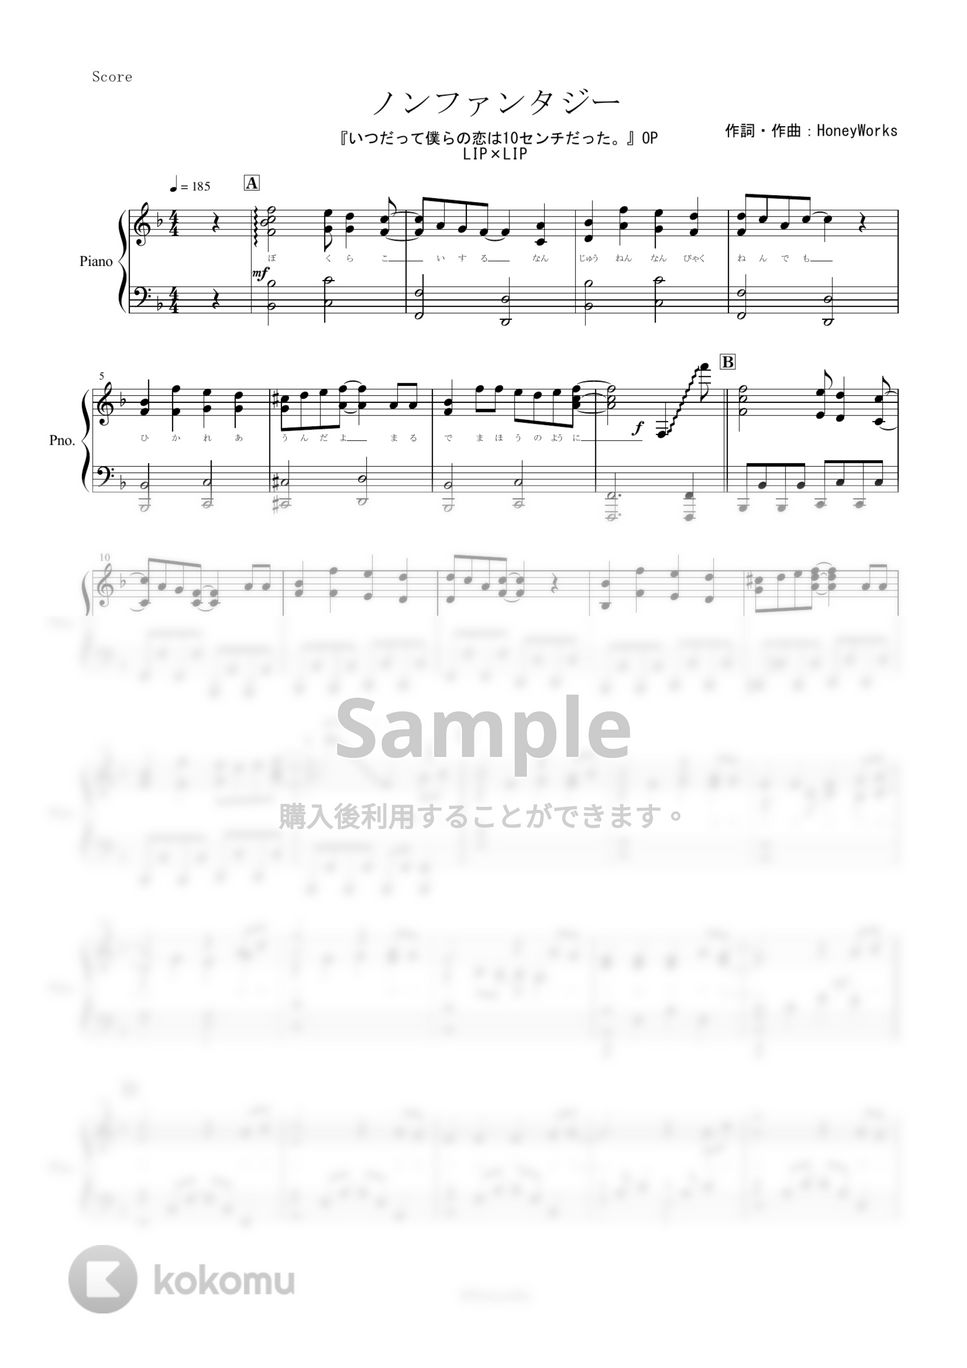 LIP×LIP - ノンファンタジー (ピアノ楽譜/全６ページ) by yoshi